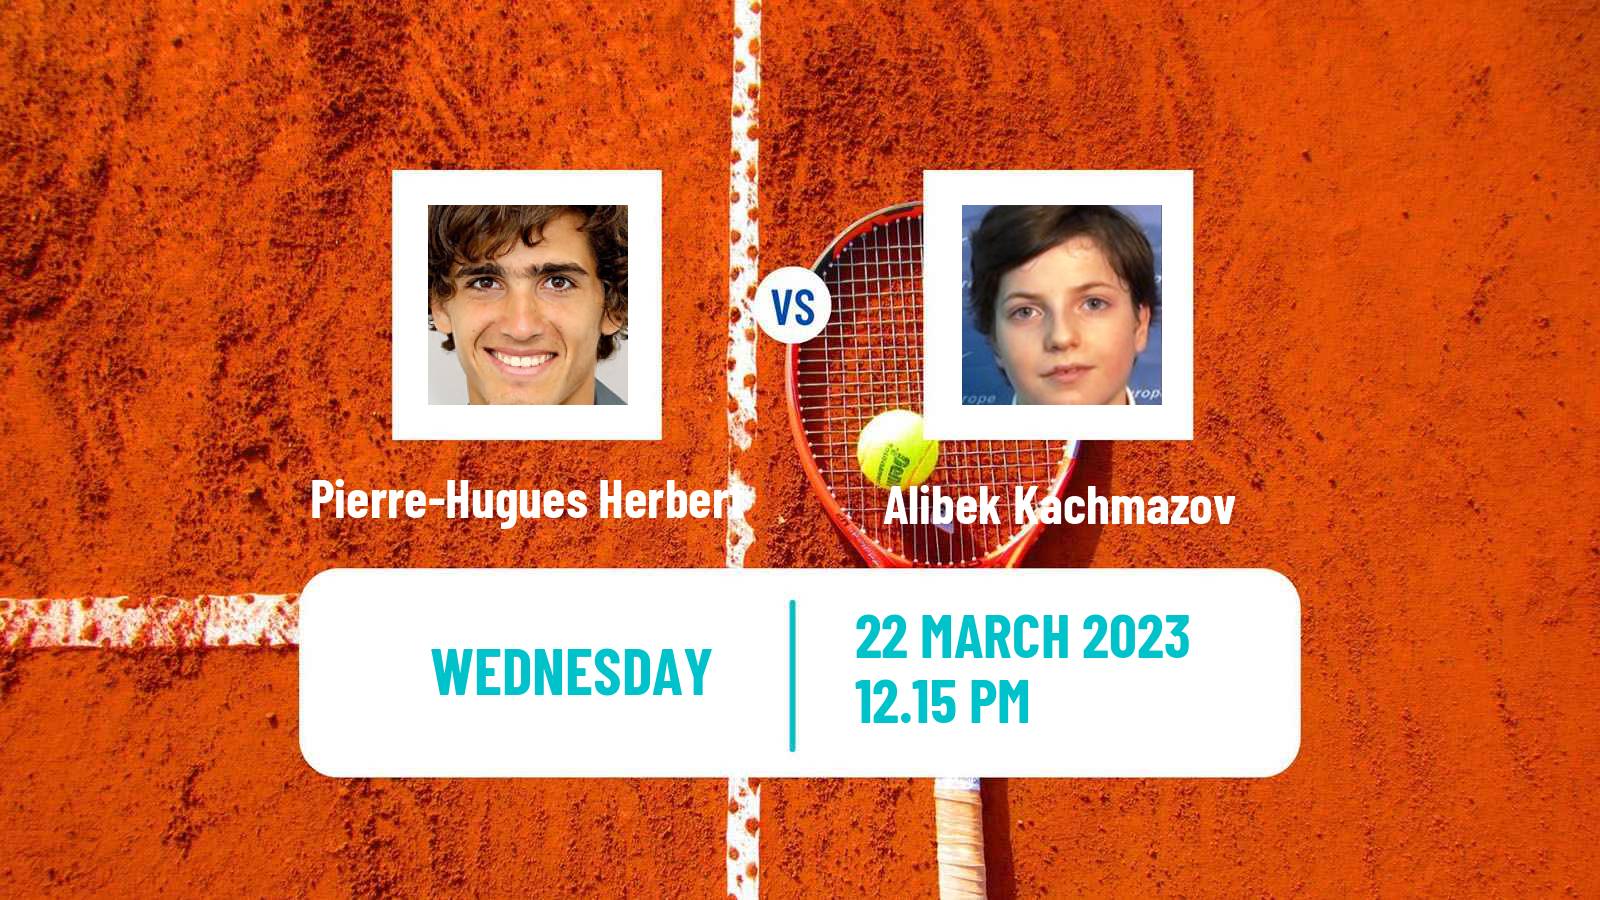 Tennis ATP Challenger Pierre-Hugues Herbert - Alibek Kachmazov